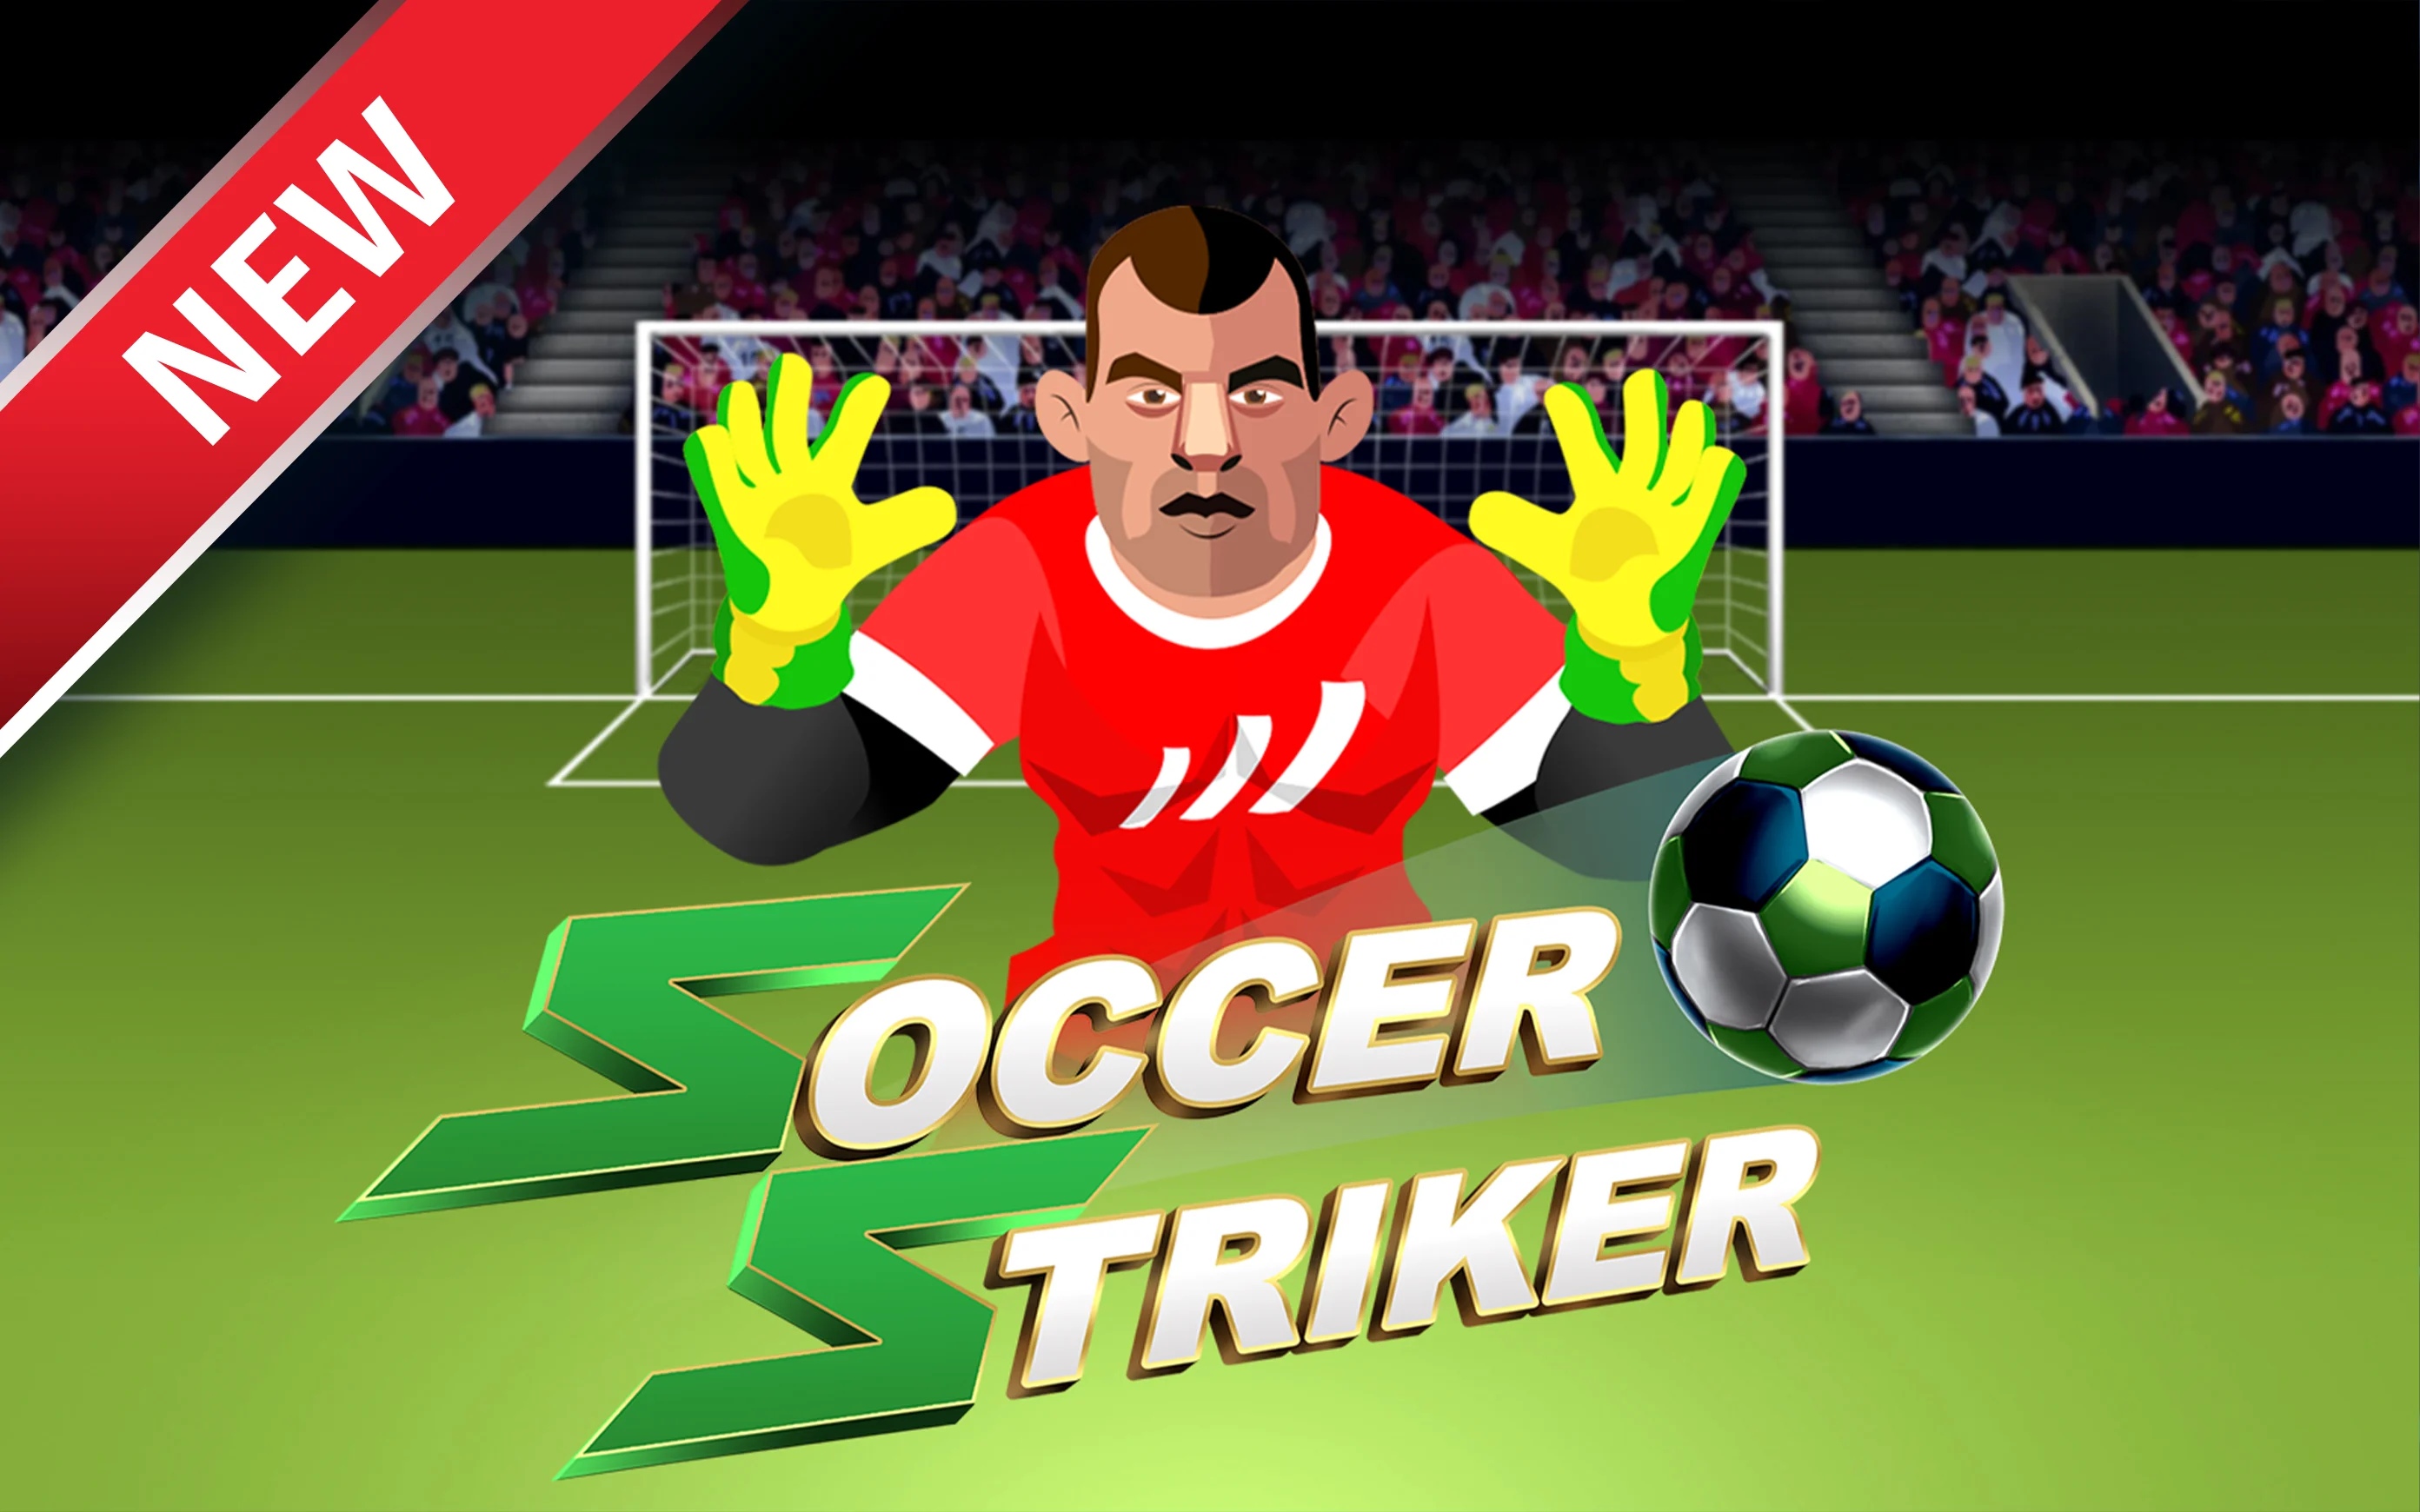 Speel Soccer Striker op Starcasino.be online casino